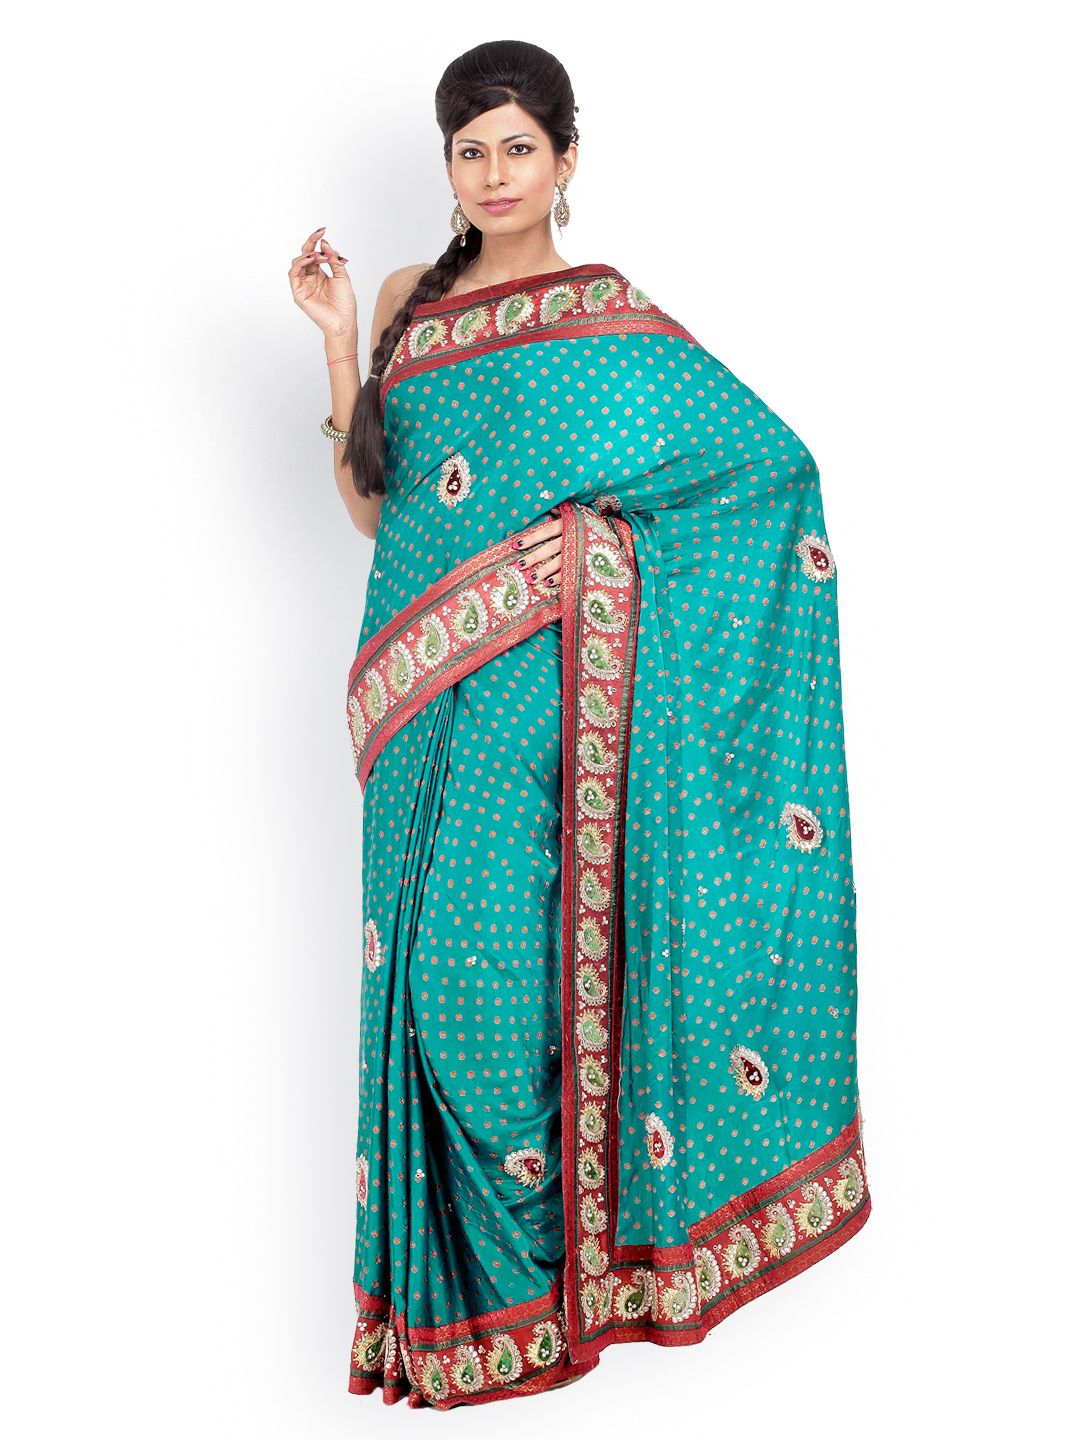 Chhabra 555 Teal Blue Embroidered Satin Fashion Saree Price in India